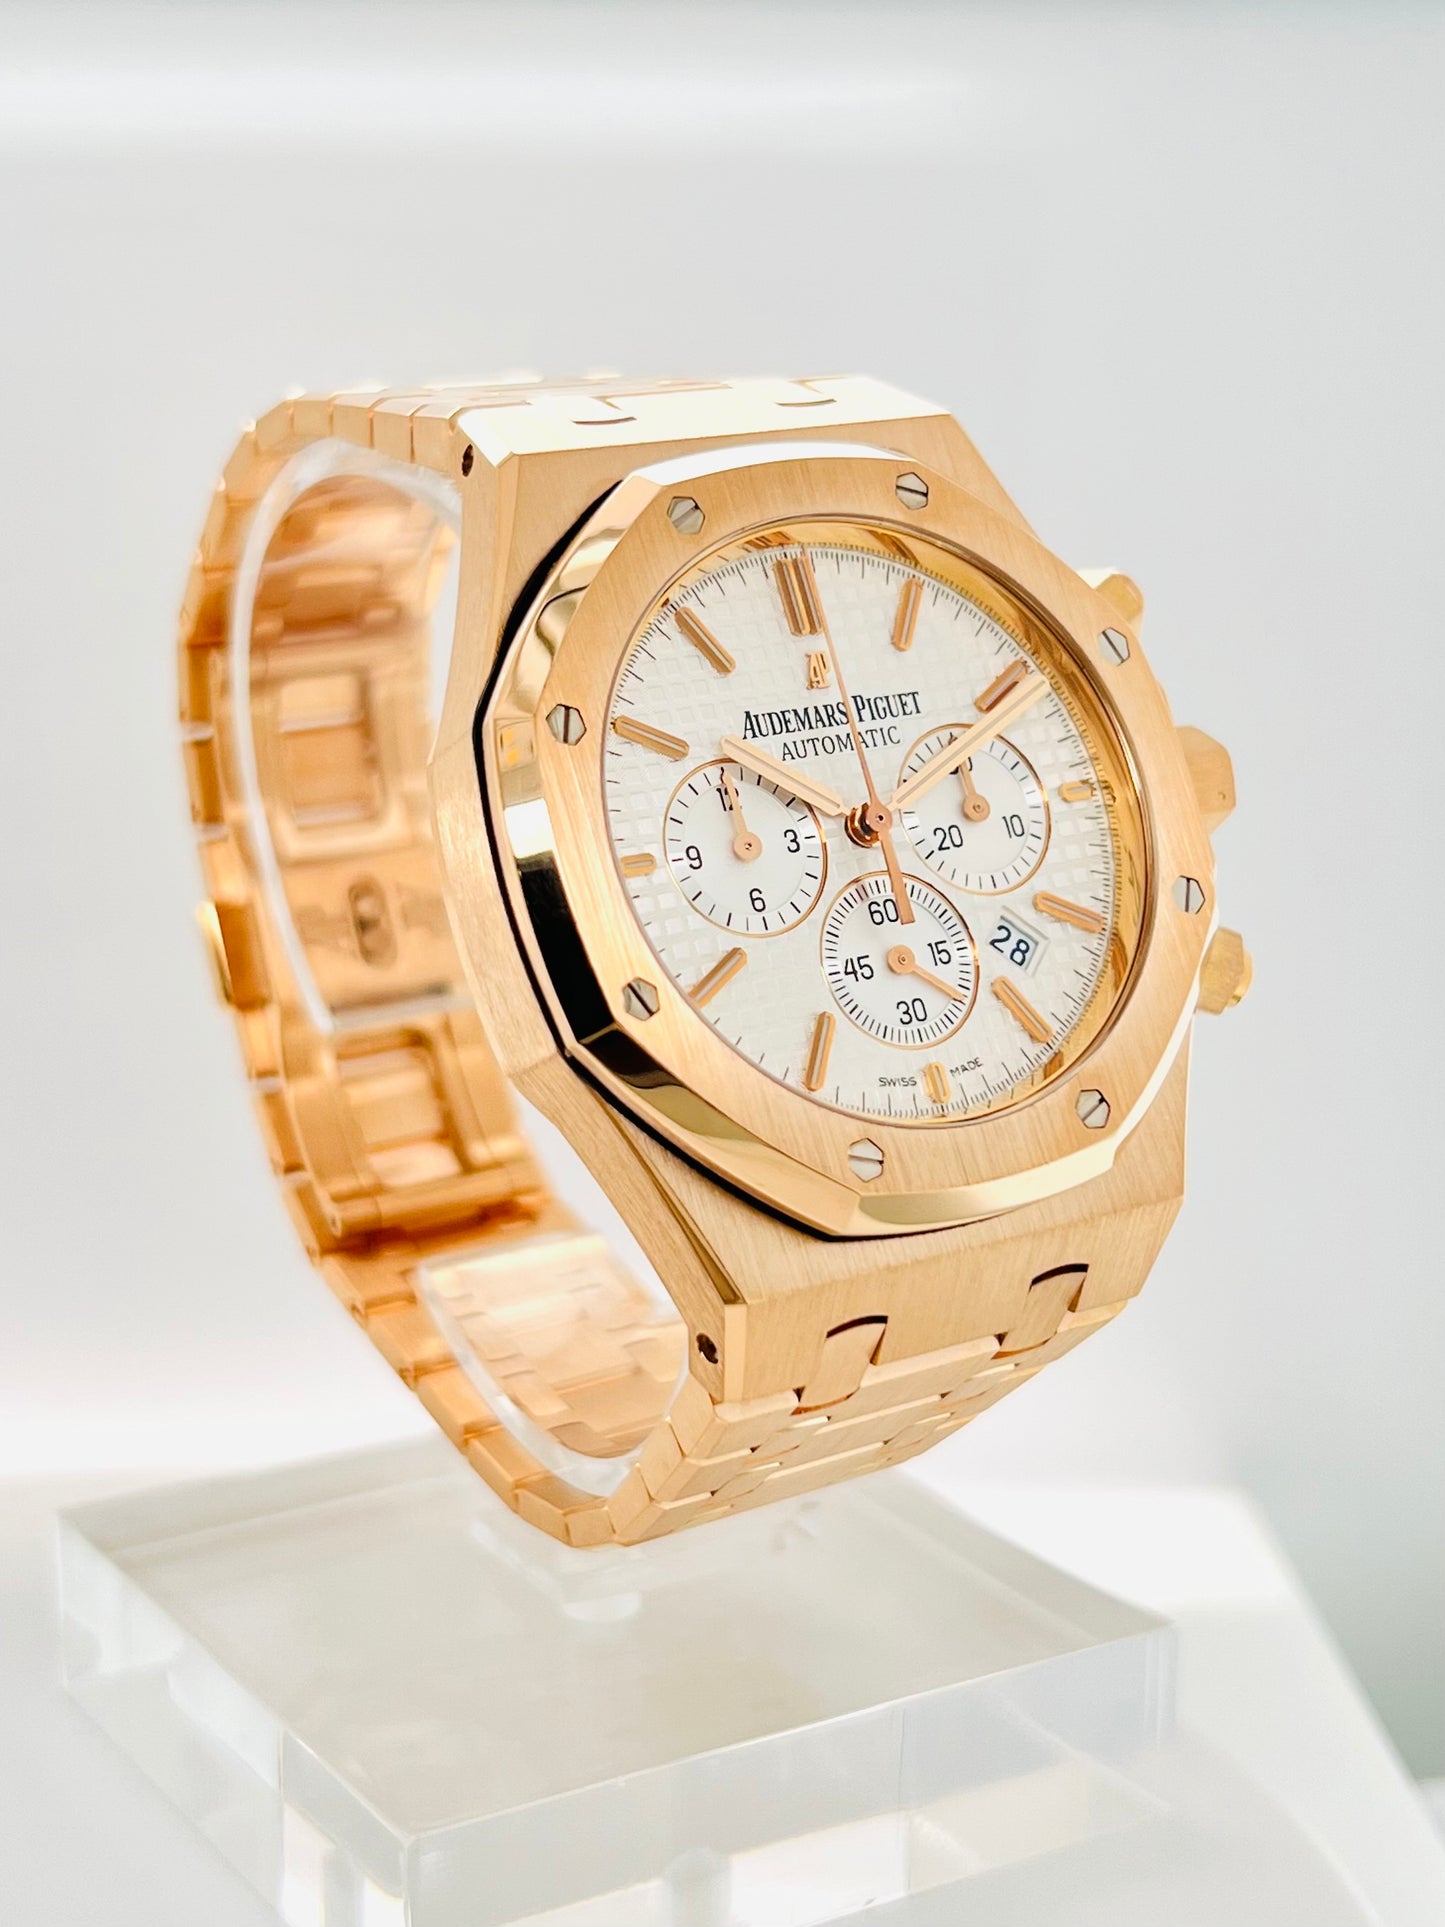 Audemars Piguet Royal Oak Chronograph 41mm Rose Gold Men's Luxury Watch Model #26320OR.00.D088CR.01